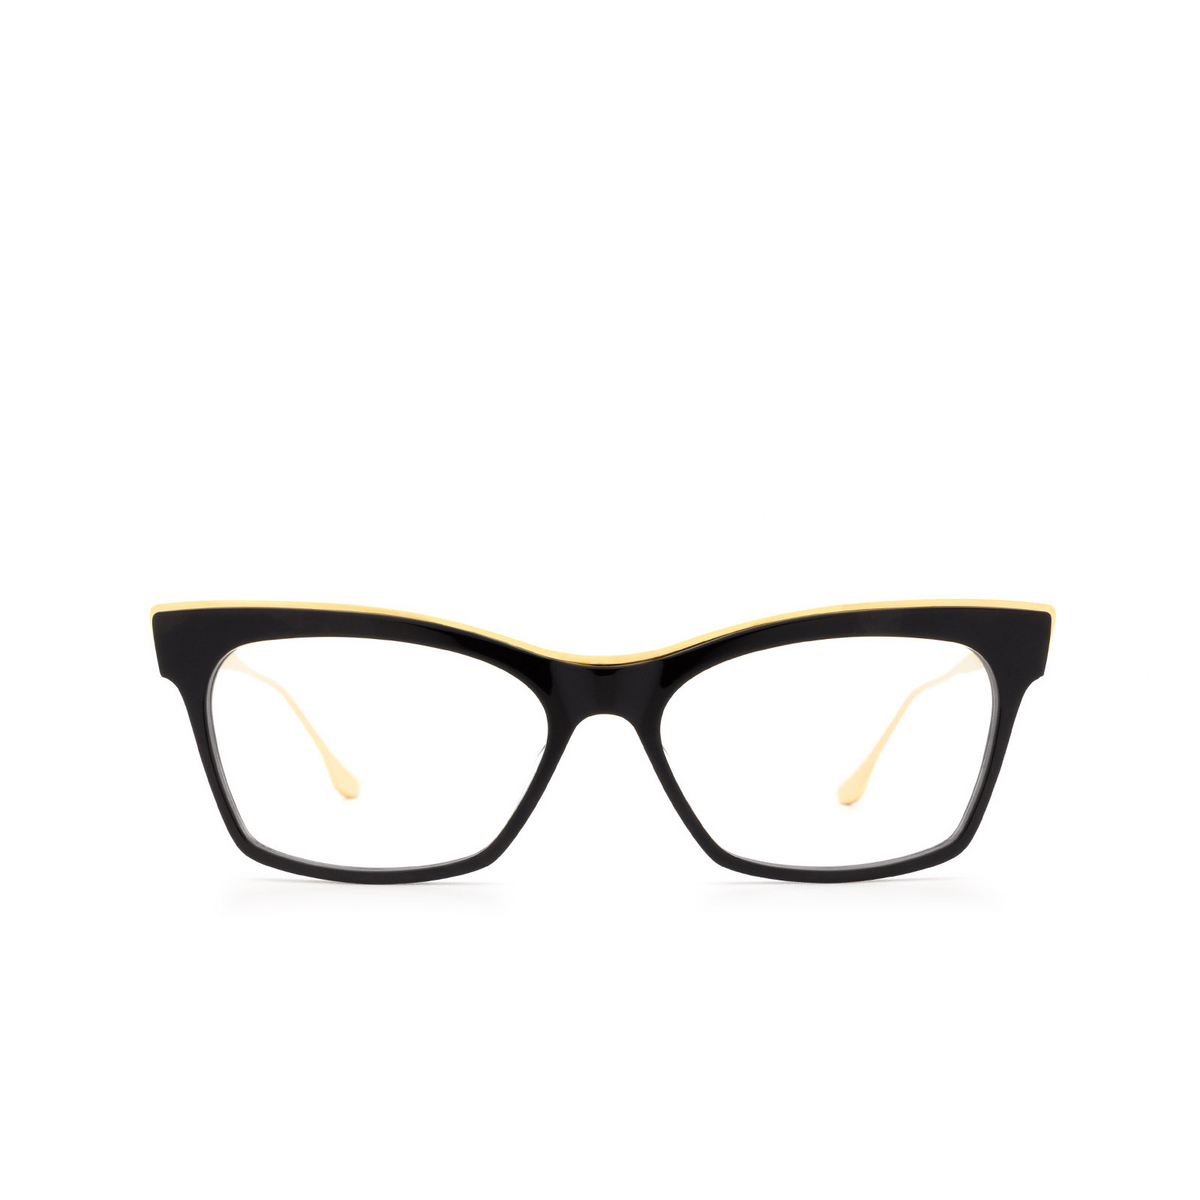 Dita NEMORA Eyeglasses BLK-GLD Black & Gold - front view